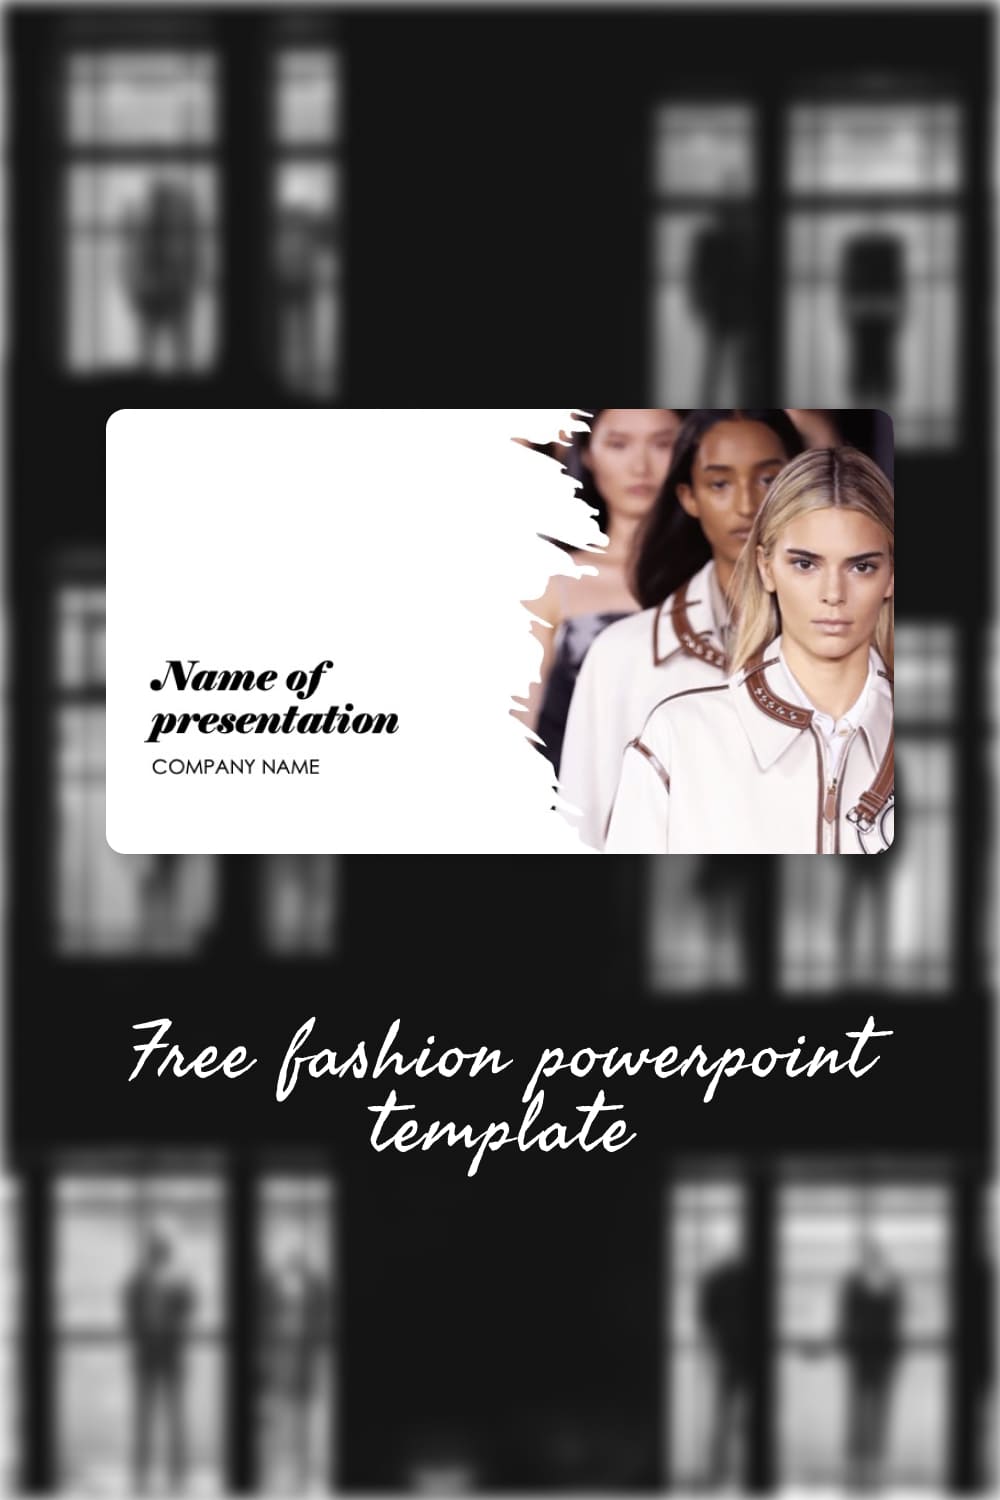 Pinterest Free Fashion Powerpoint Template.